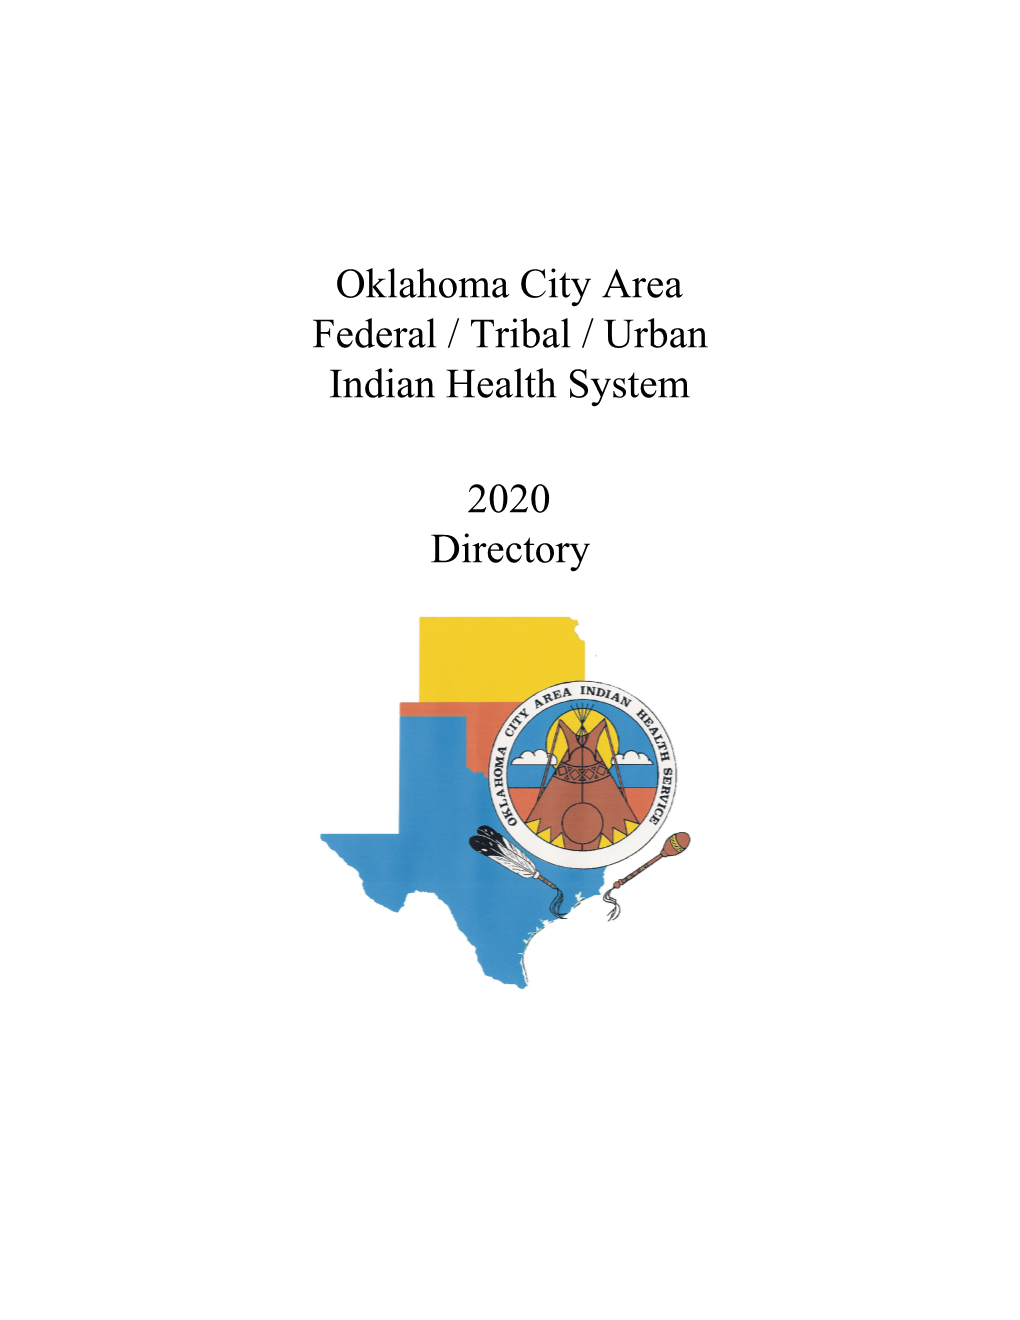 Oklahoma City Area Federal/Tribal/Urban Indian Health System Directory